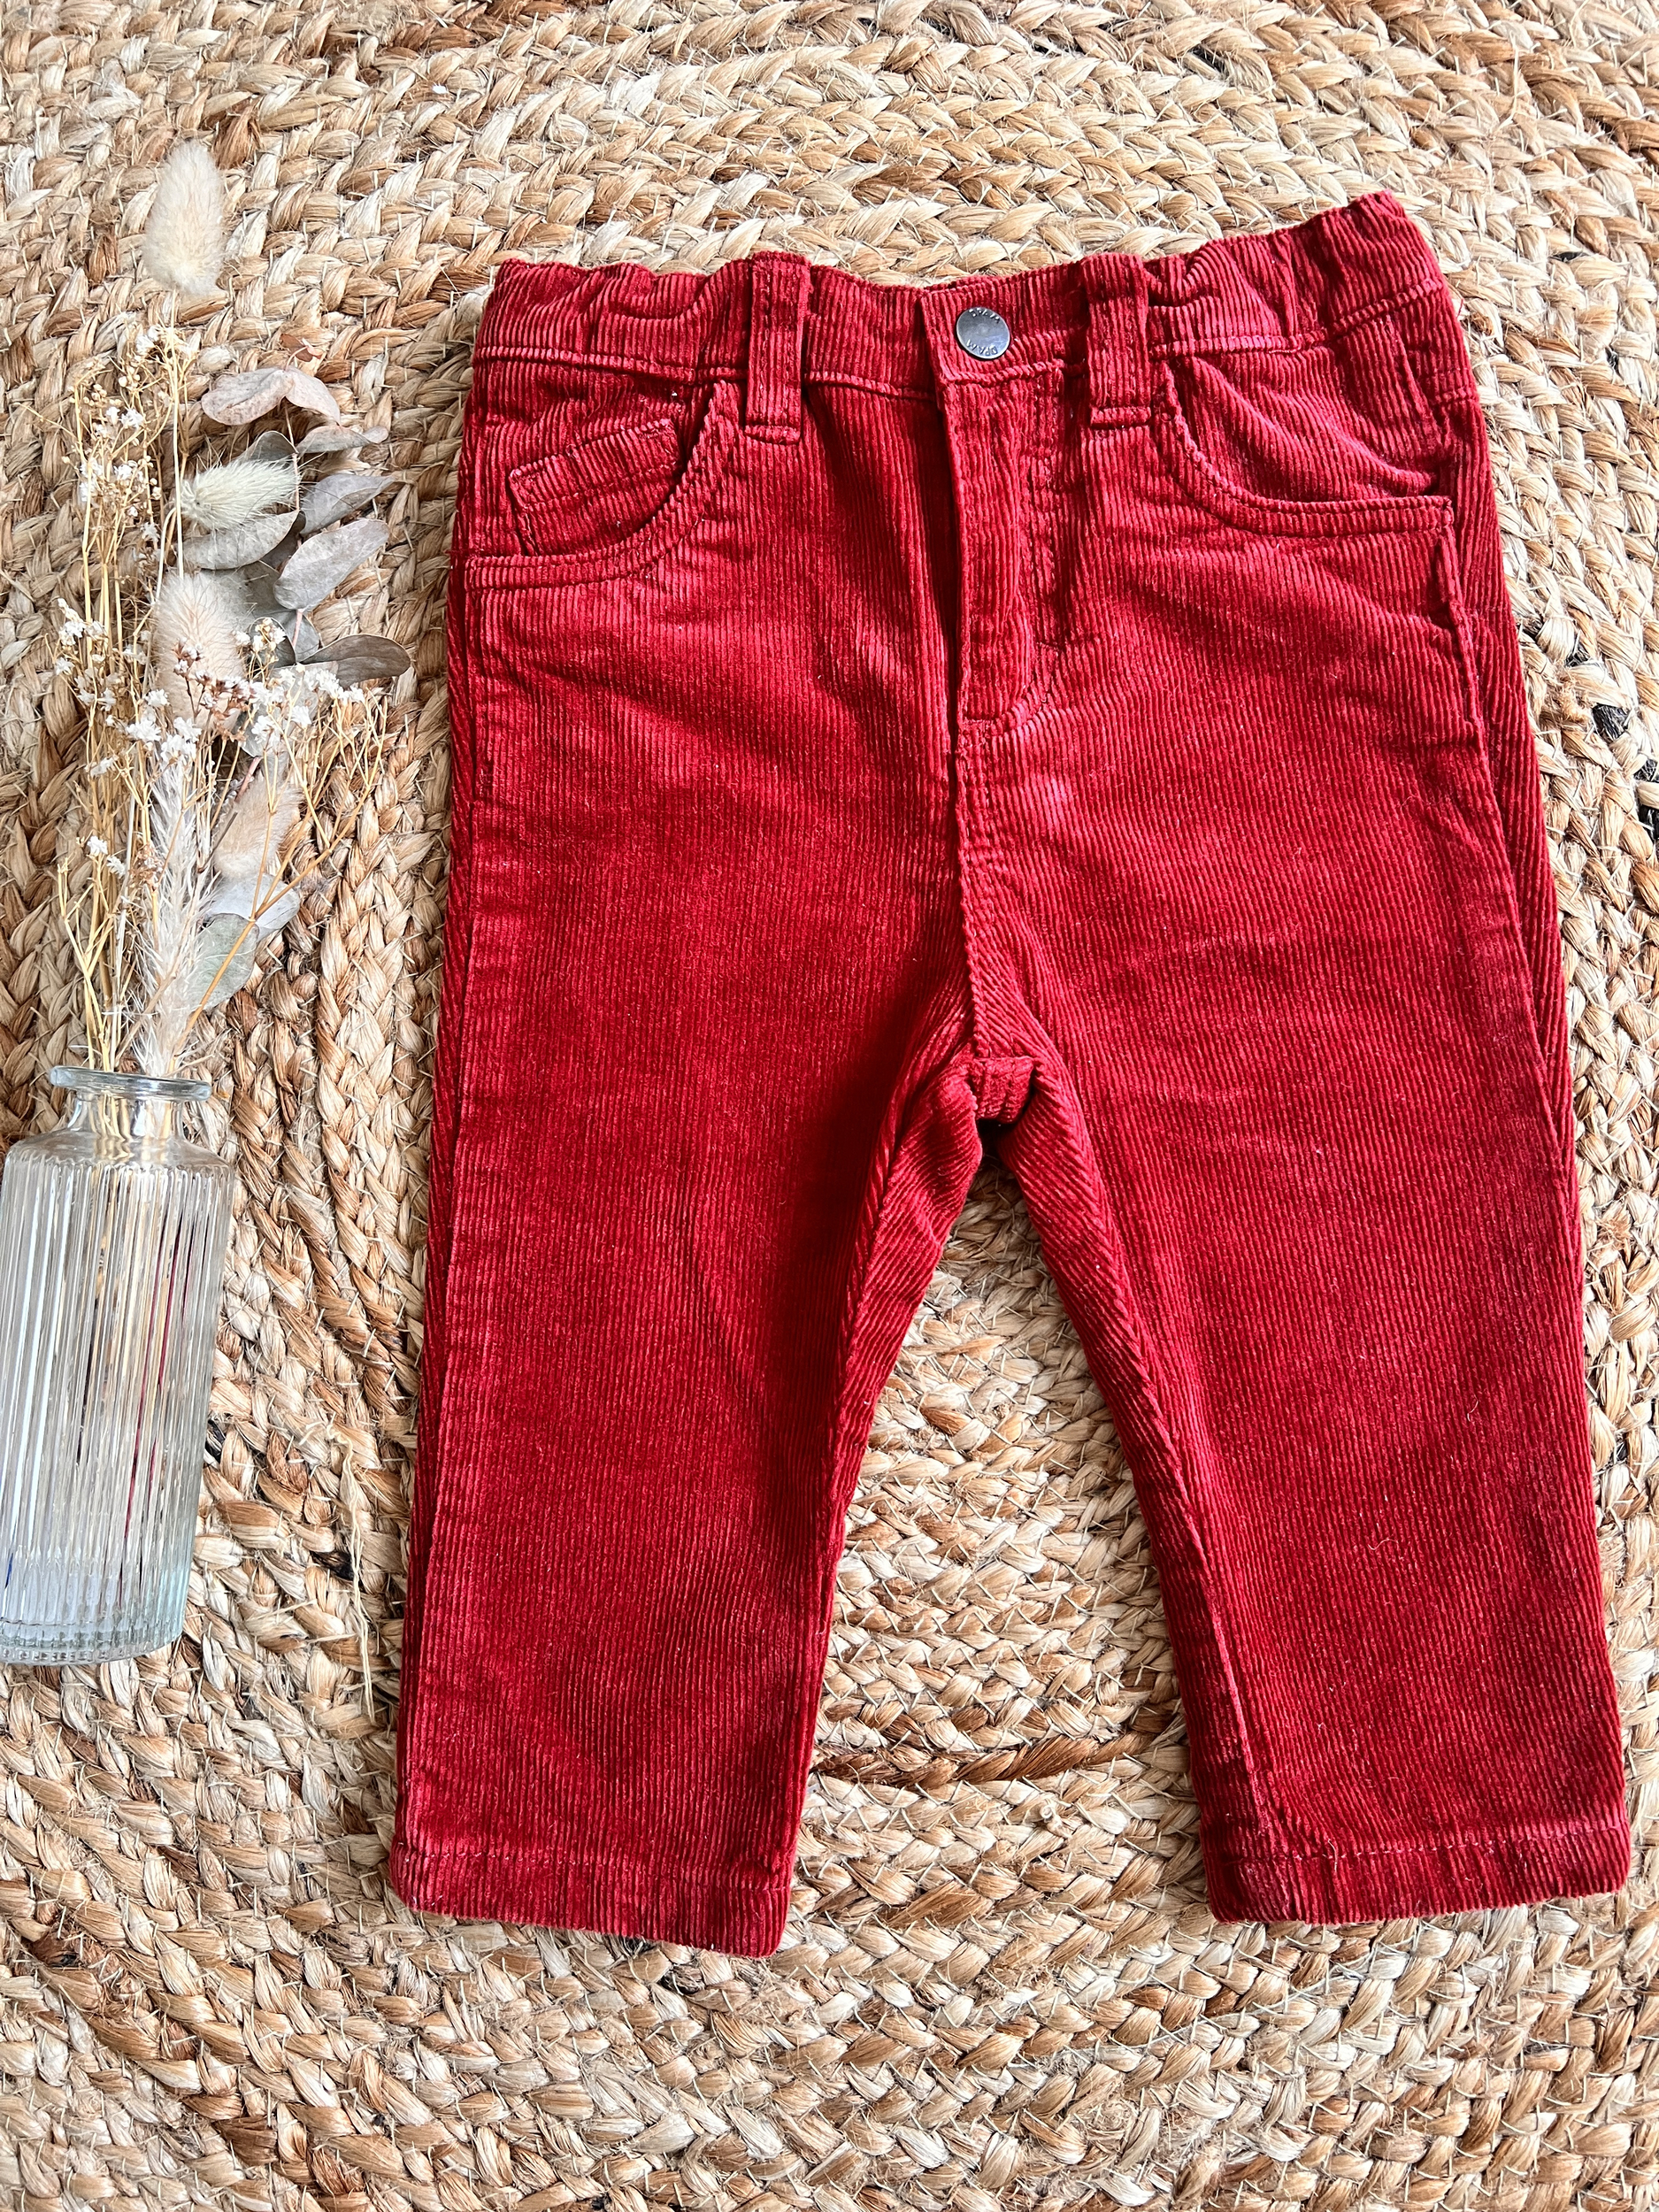 Pantalon en velours bordeaux - DPAM - 12 mois